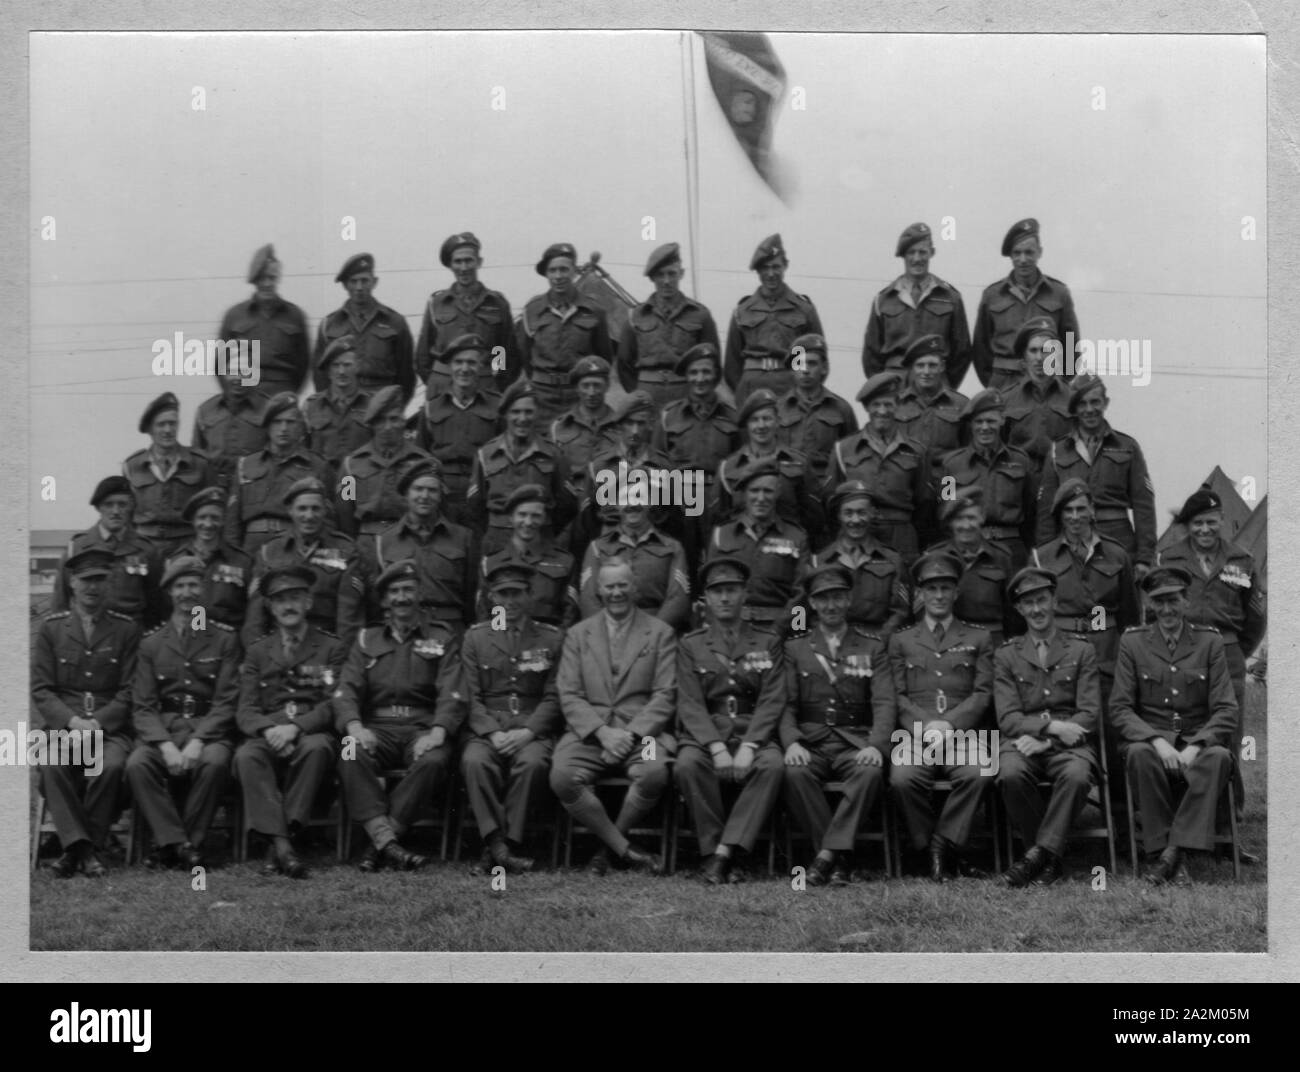 Royal Artillery Regiment Group Photo 1949 Stock Photo